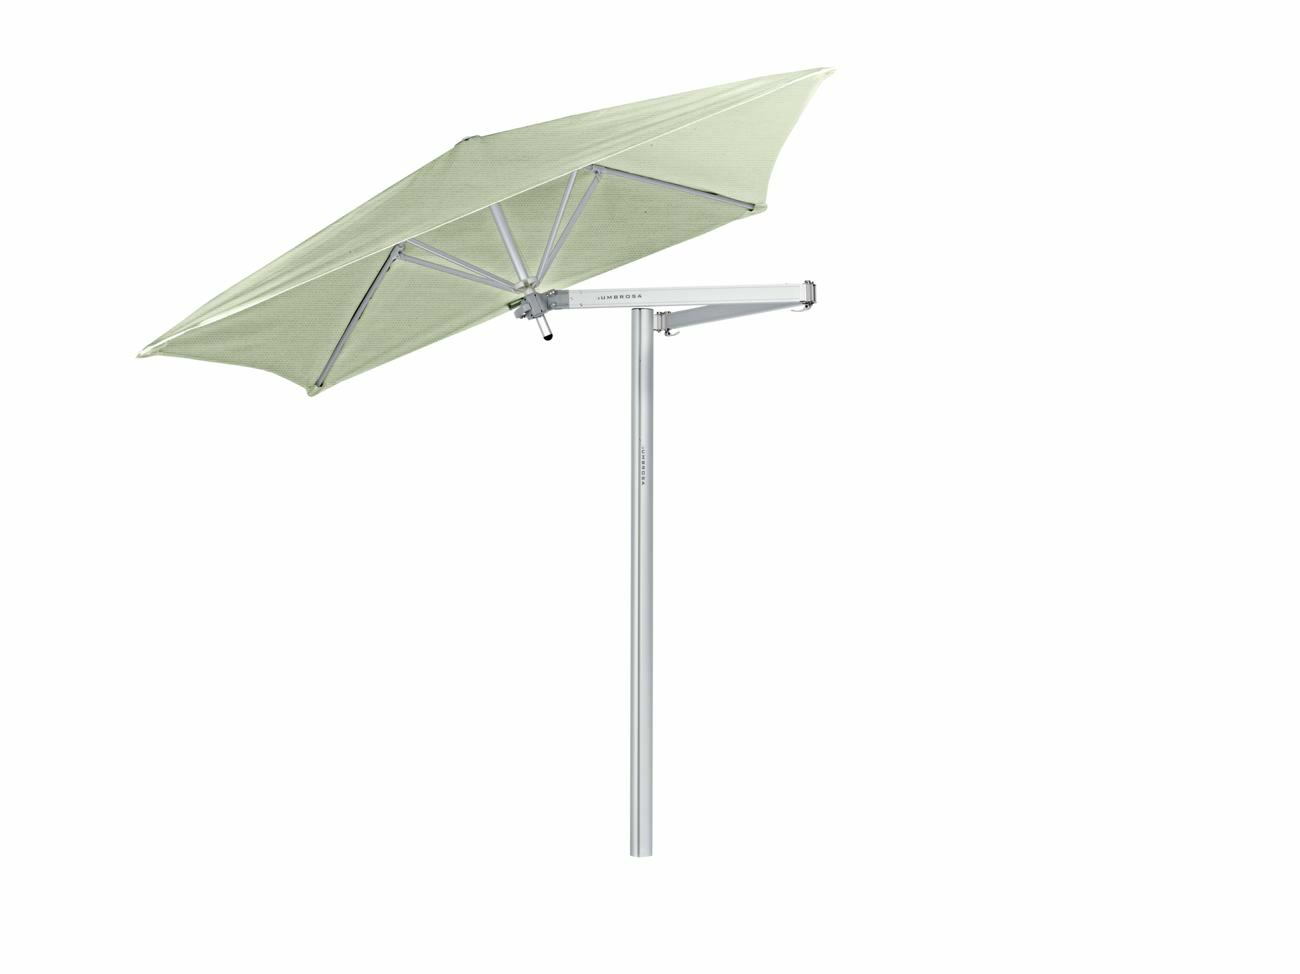 Paraflex cantilever umbrella square 1,9 m with Mint fabric and a Classic arm